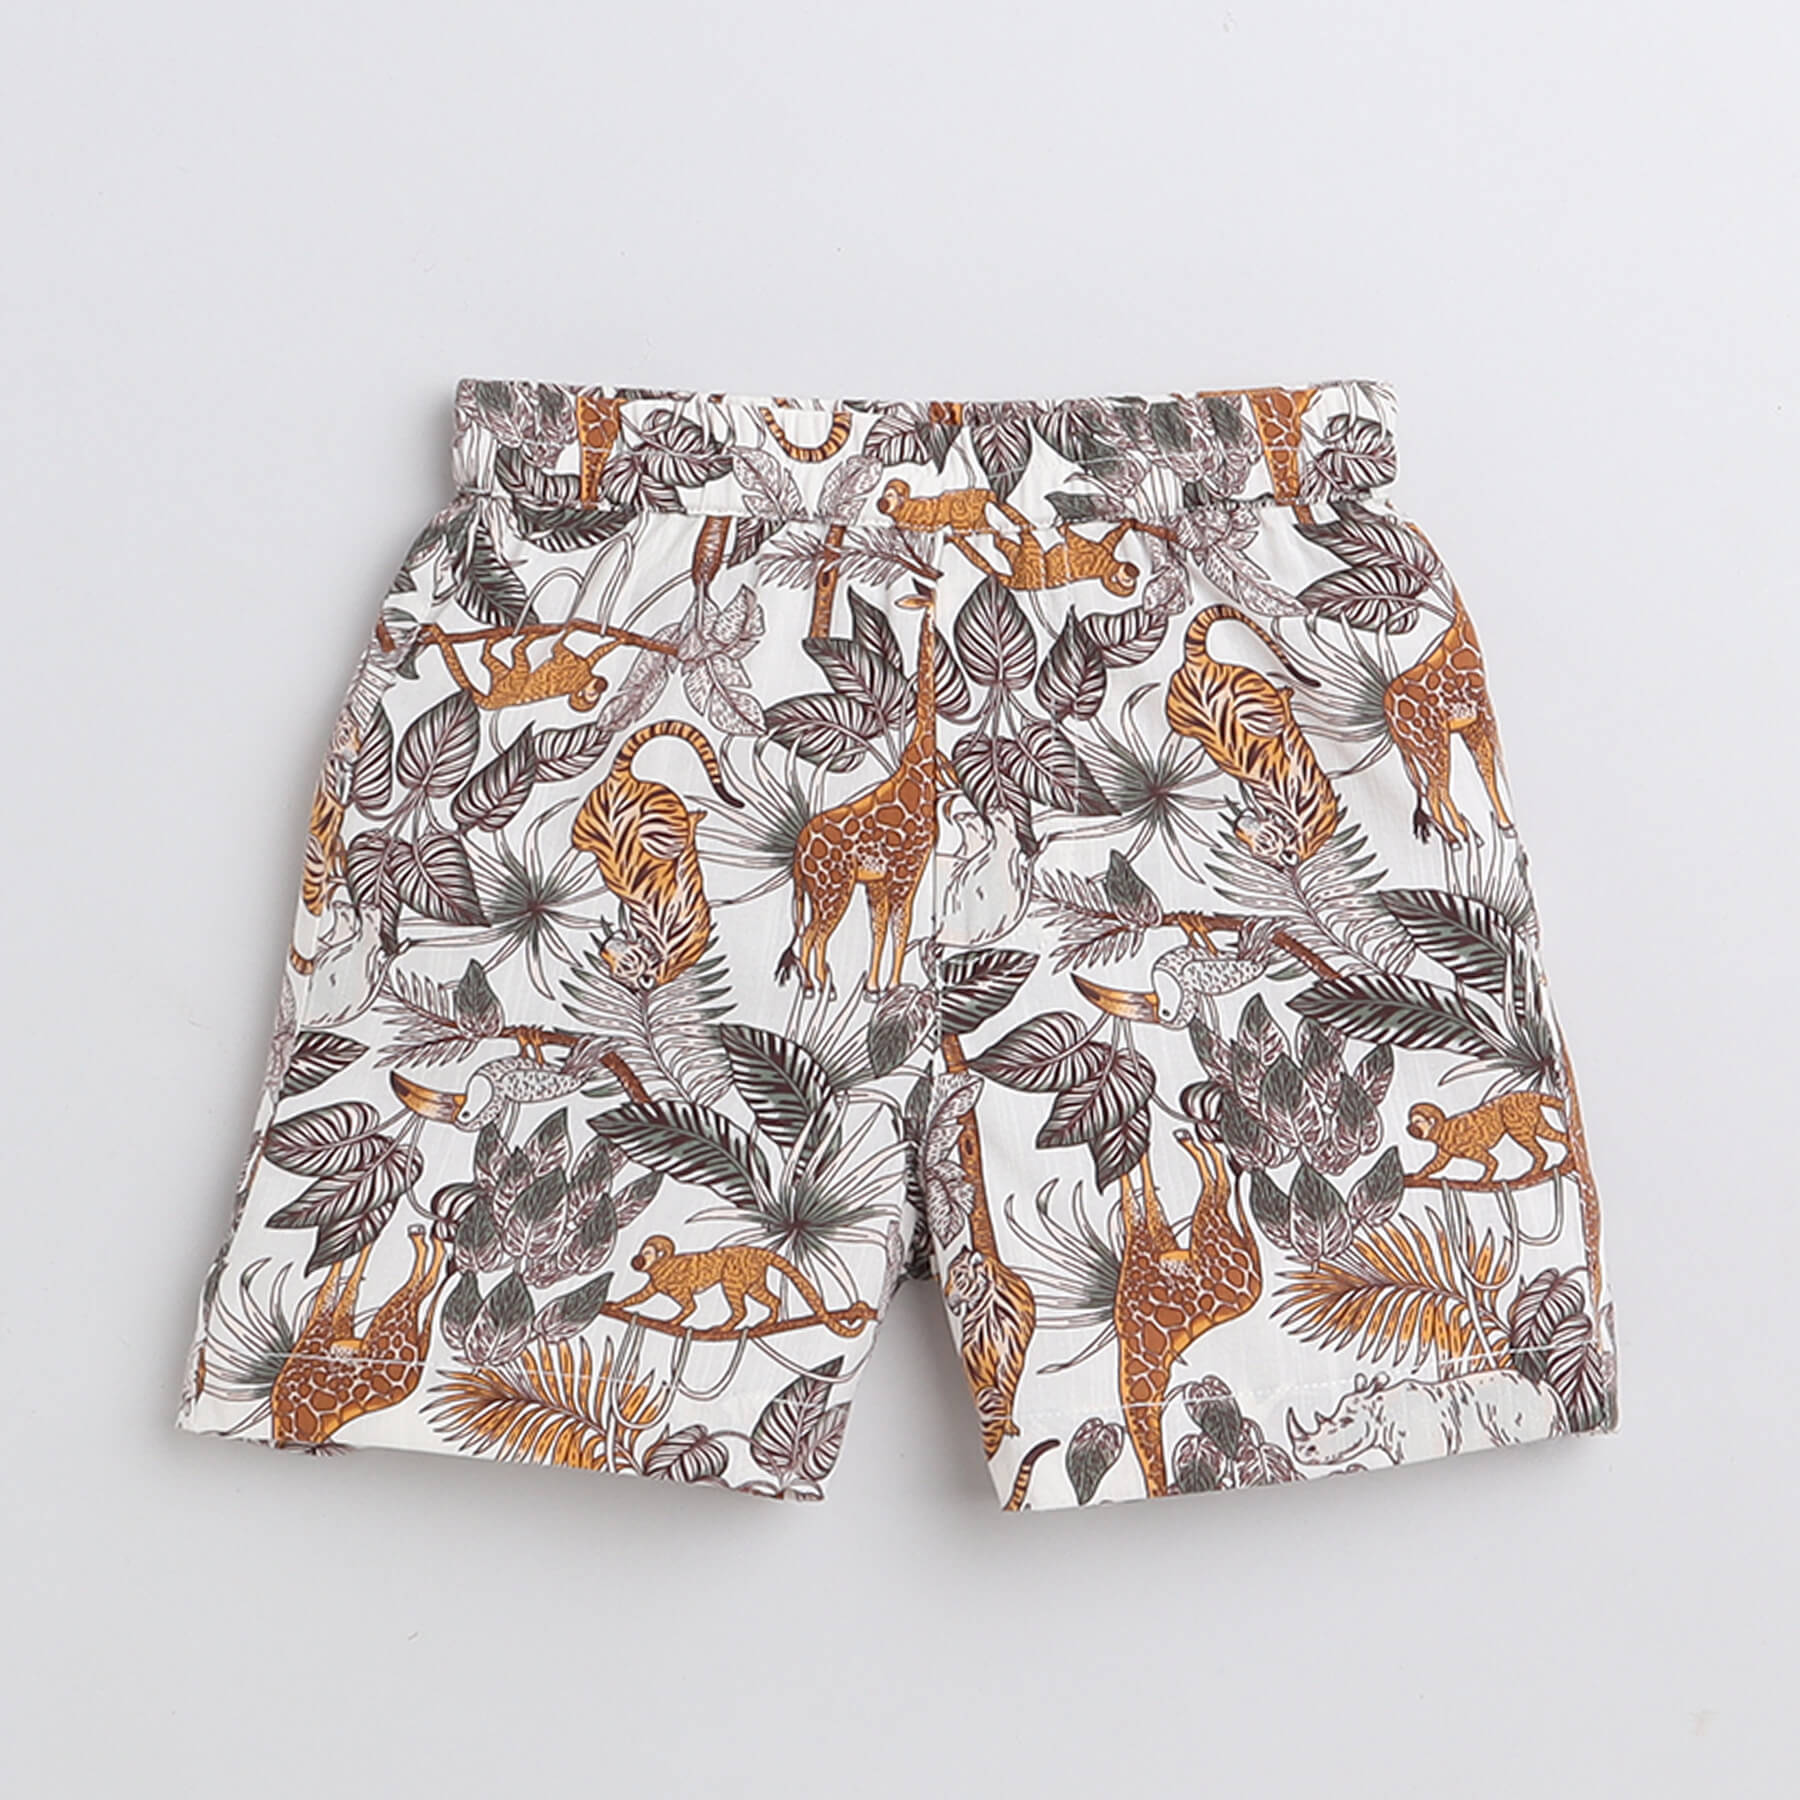 Taffykids tropical printed half sleeves shirt and shorts set- Multi